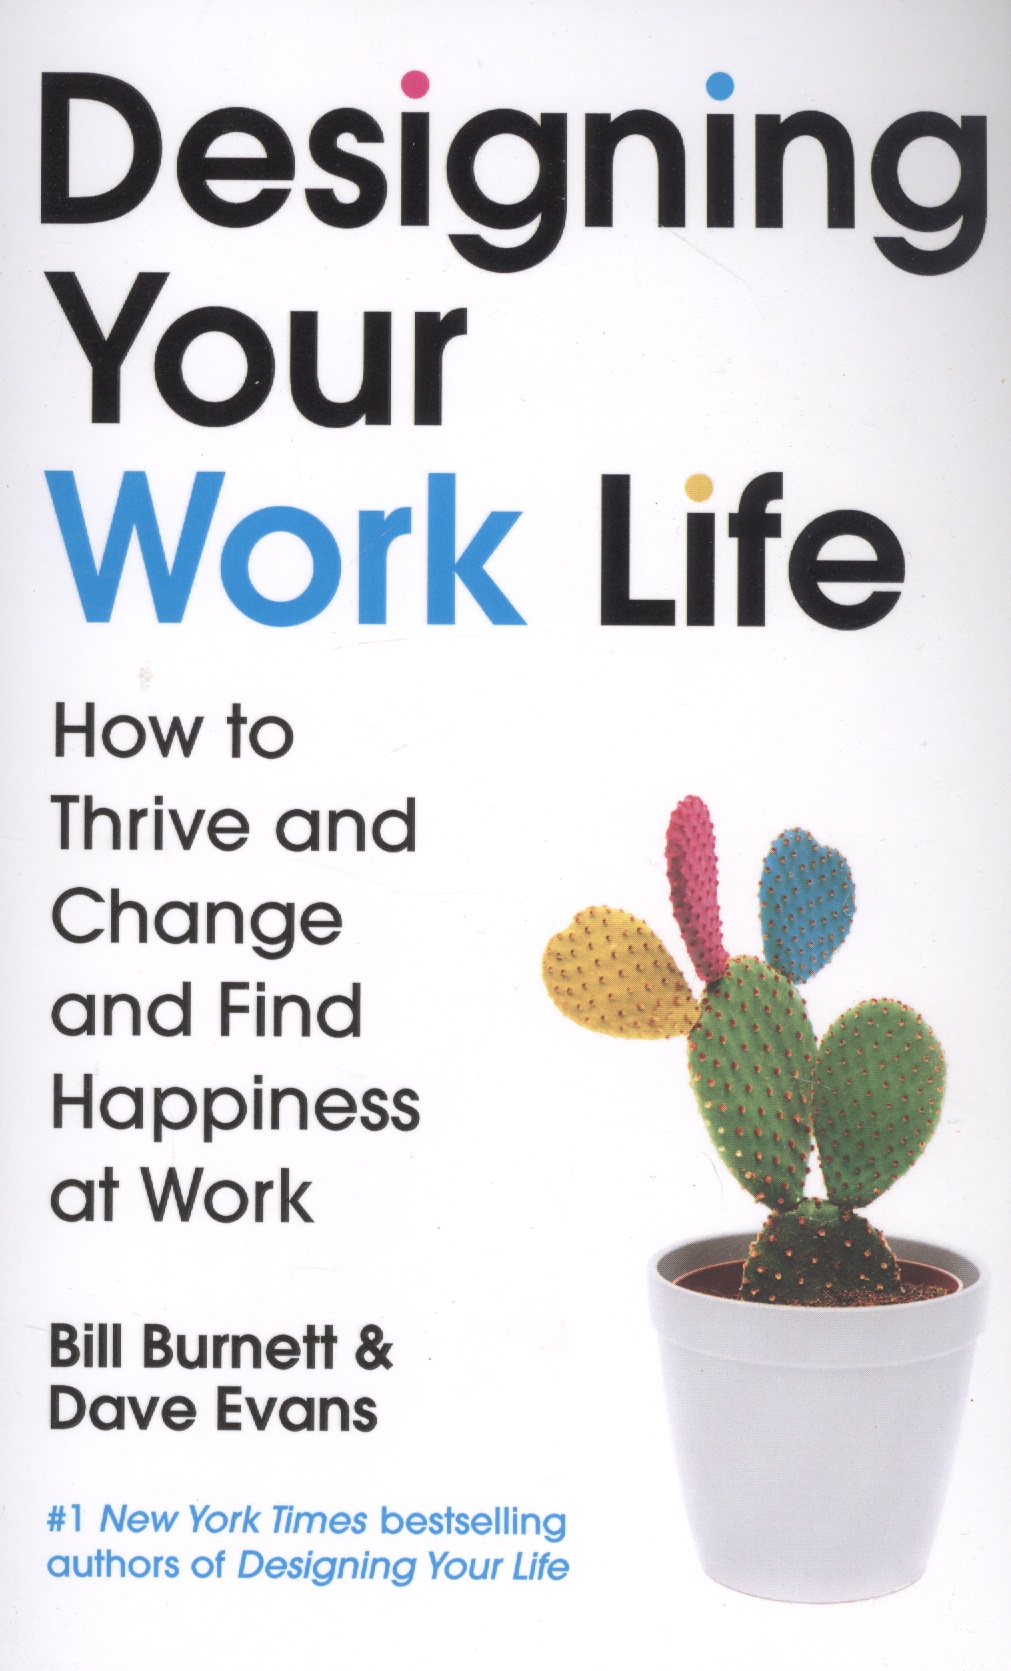 DESIGNING YOUR WORK LIFE